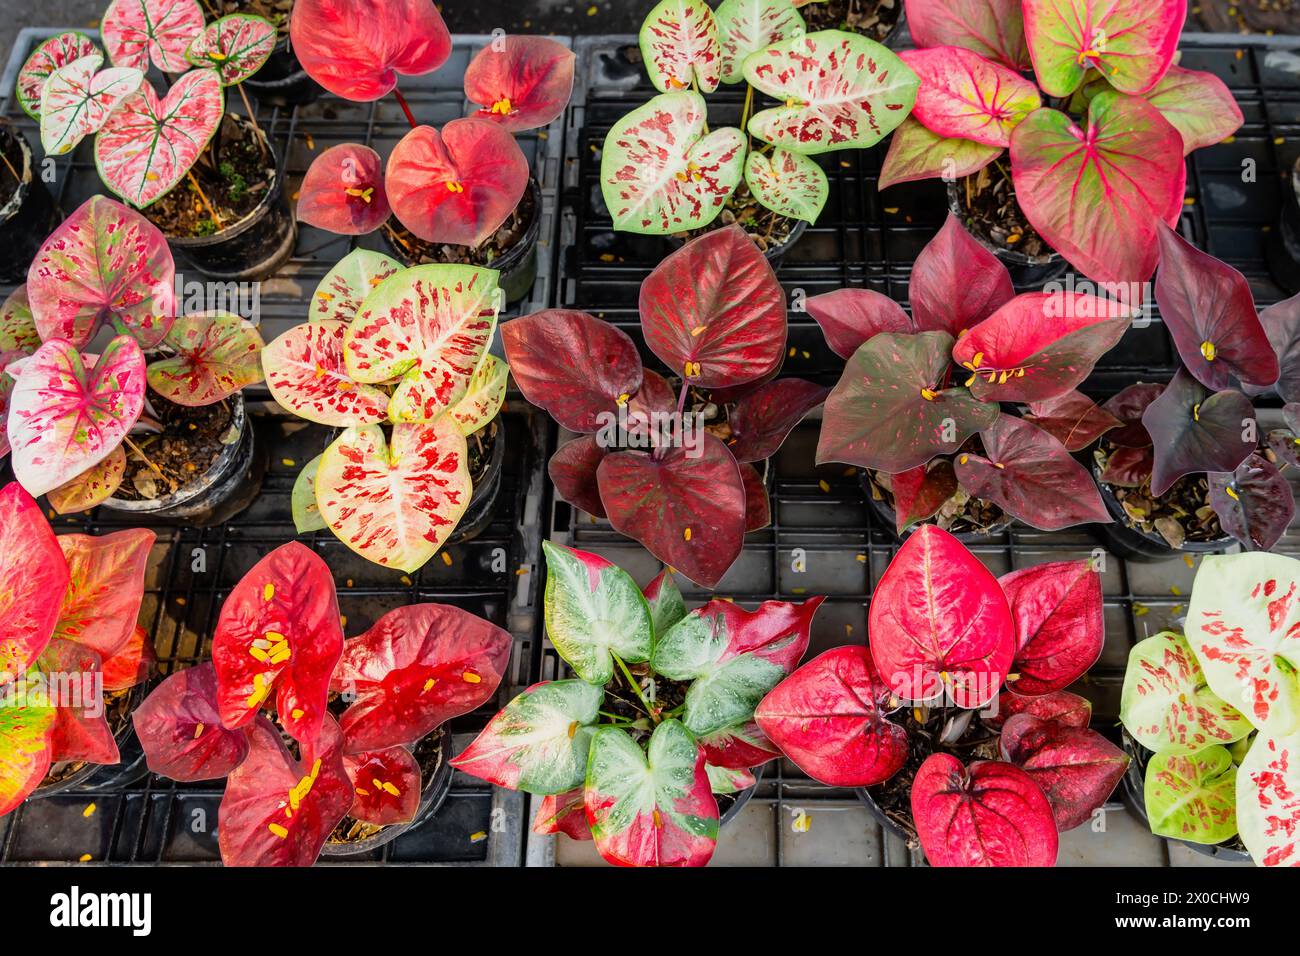 Colorful exotic caladium plant hybrid red foliage in flower pots inside urban jungle garden market. Stock Photo